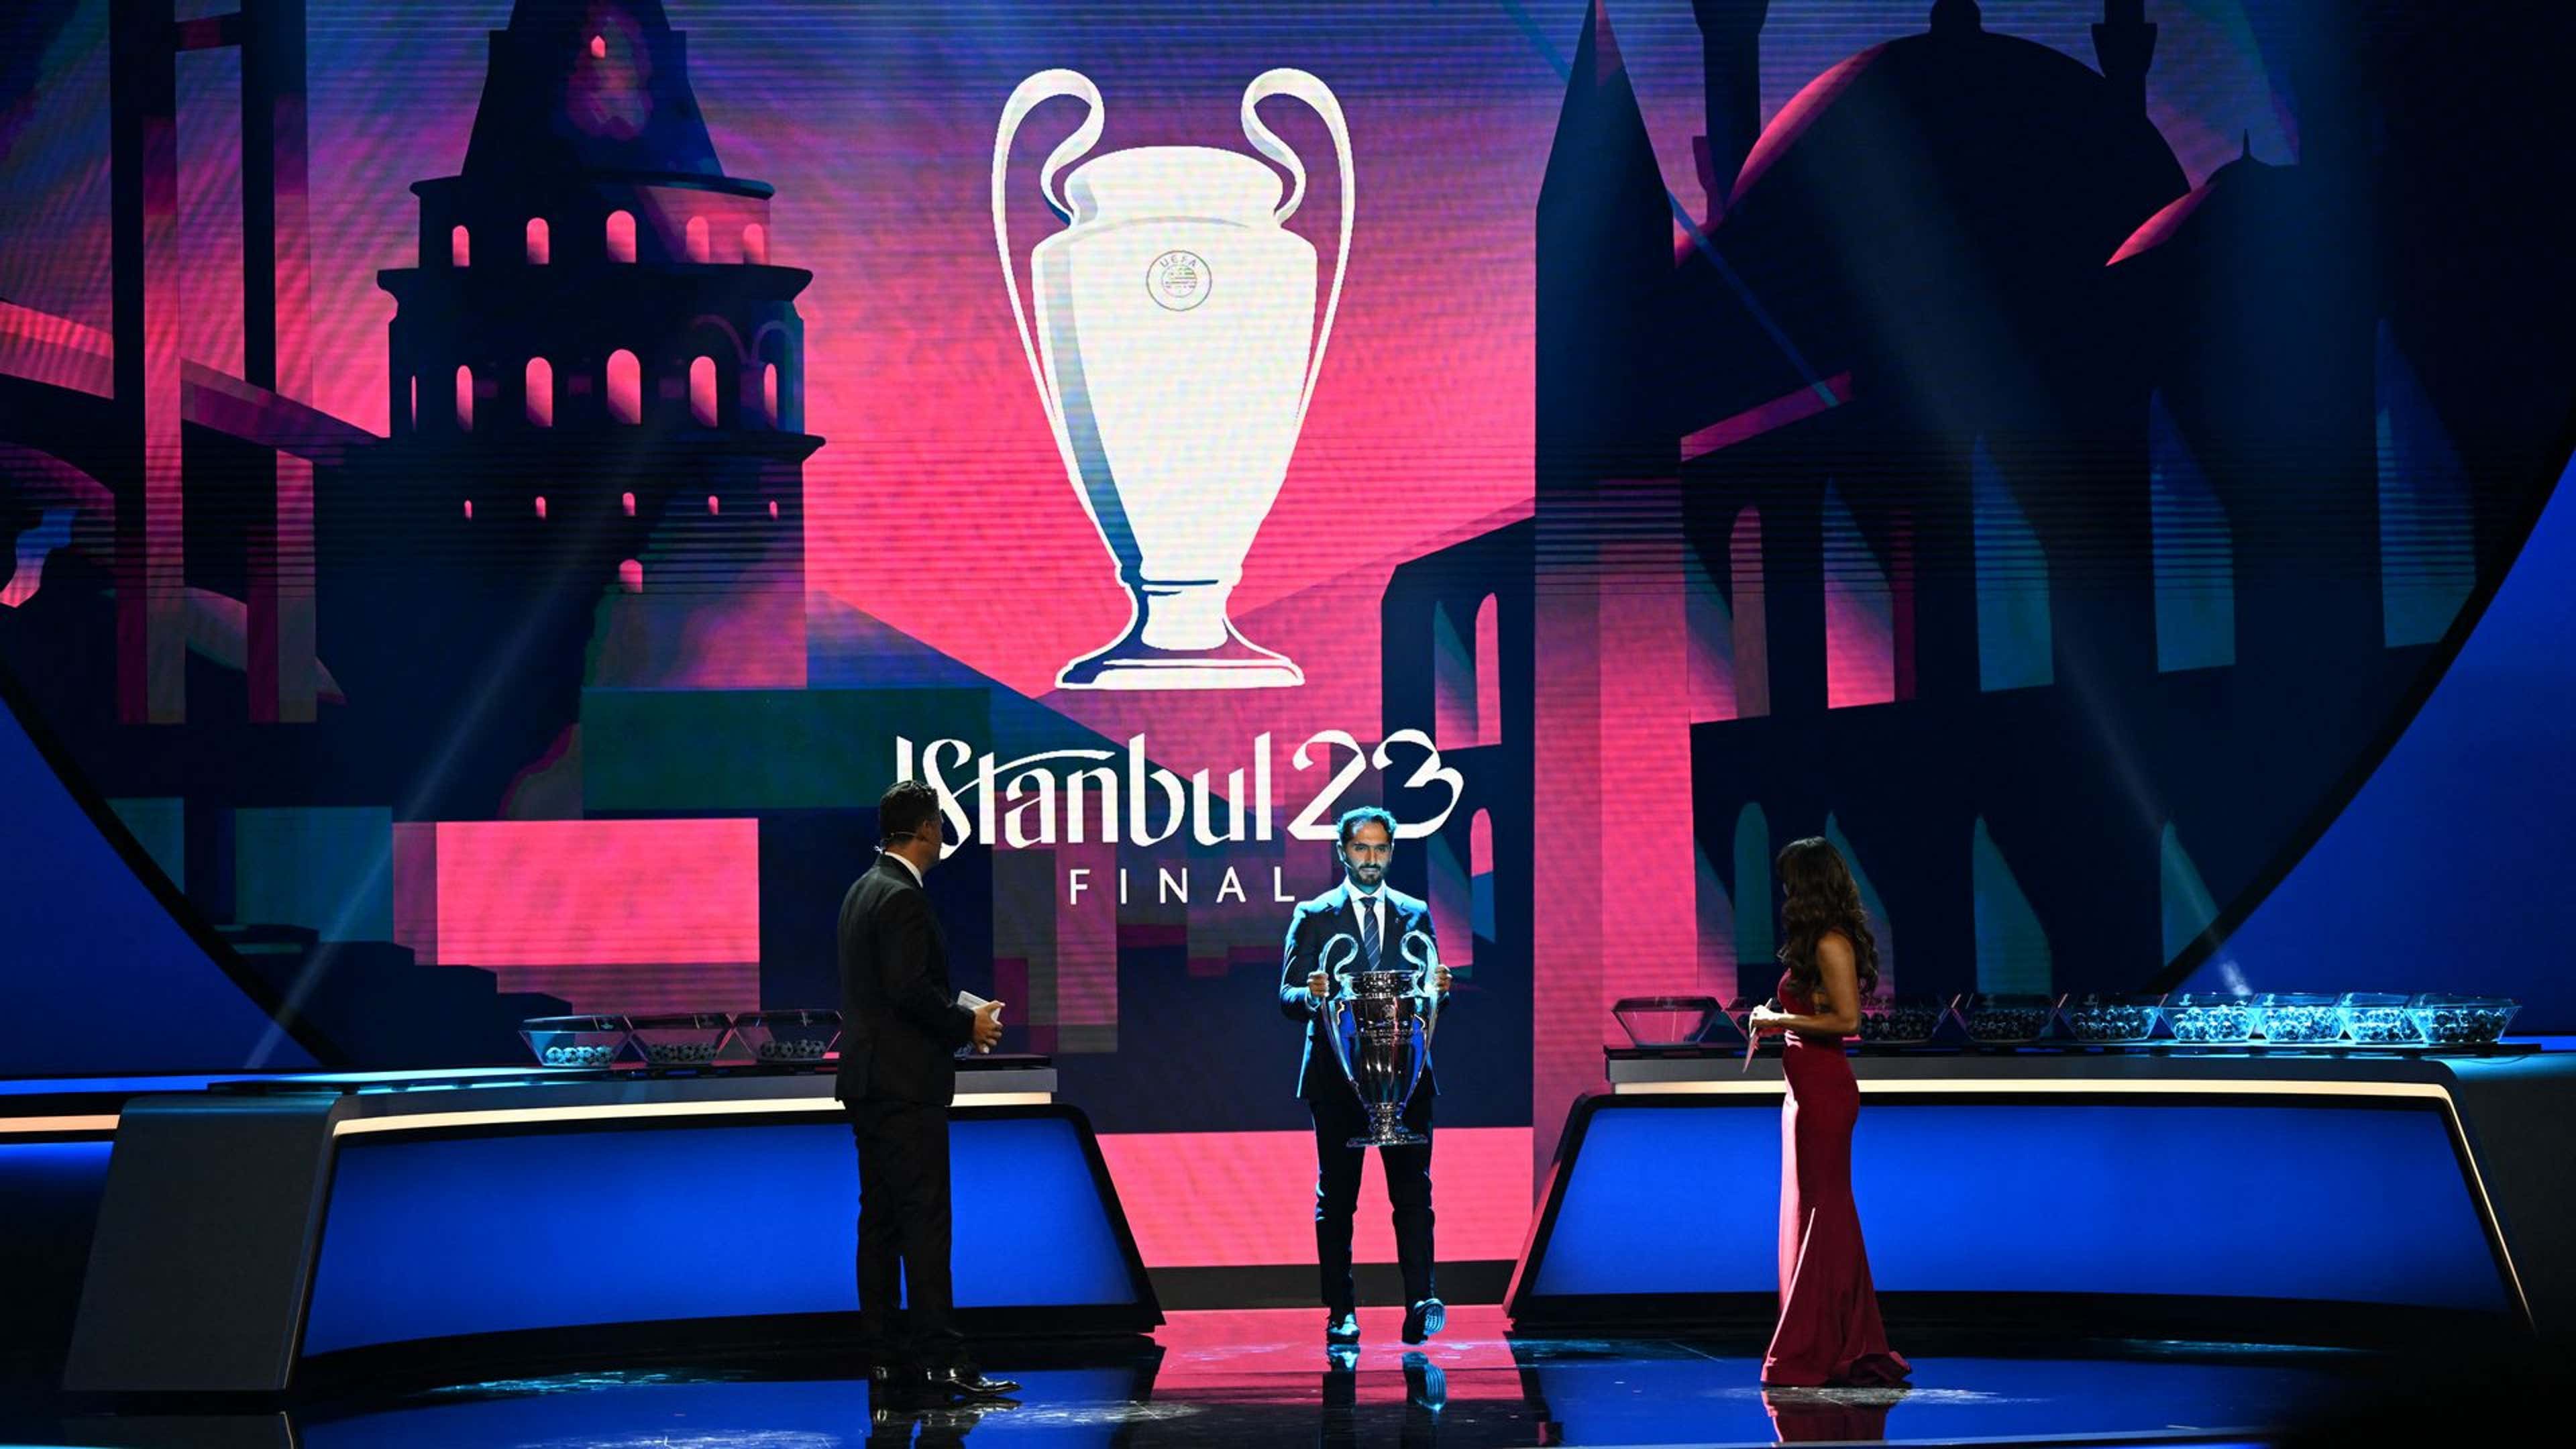 Quem vai narrar a final da Champions League? Saiba os canais que